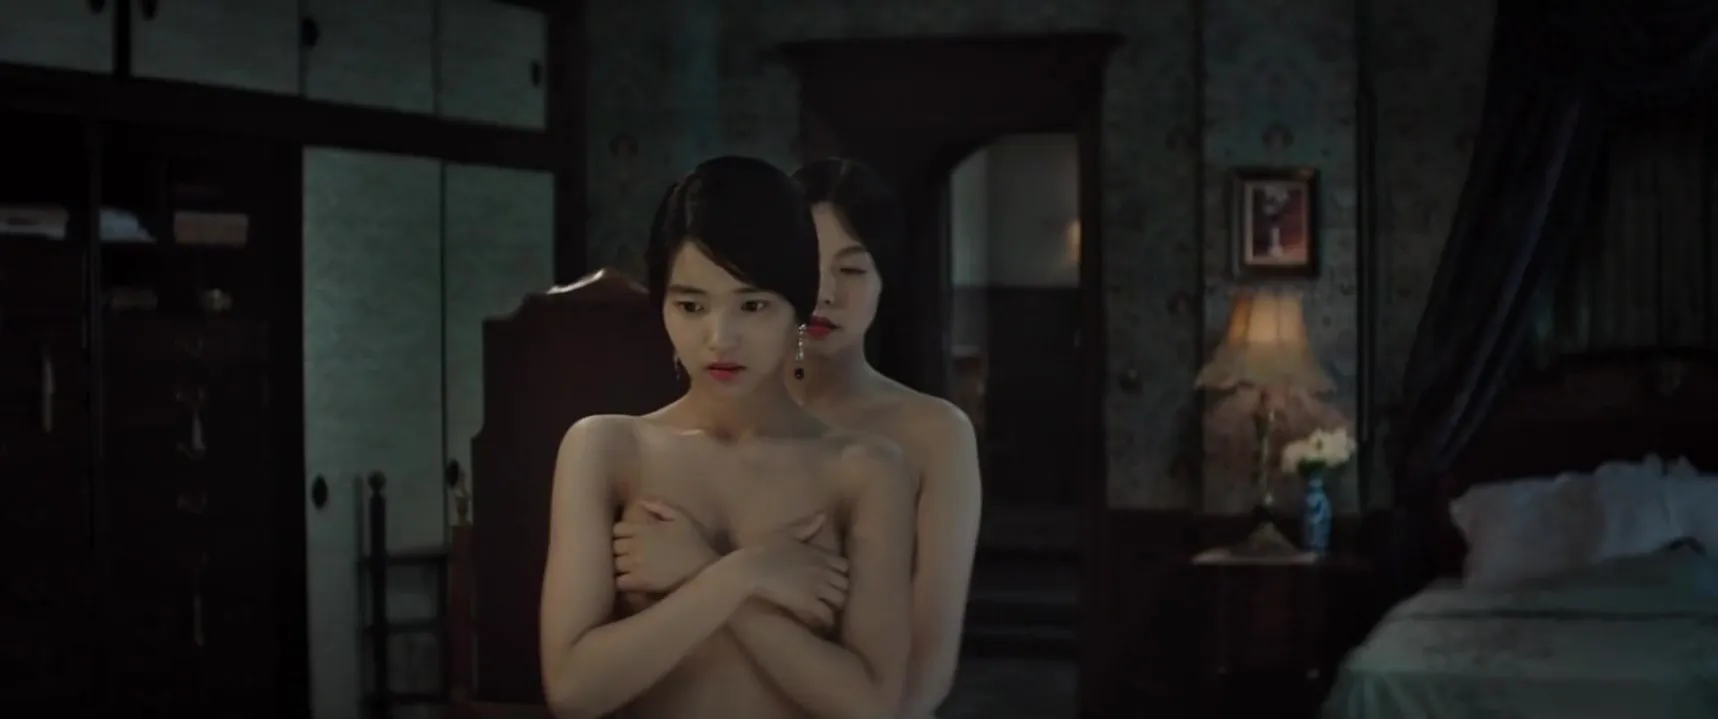 Hot Asian Lesbian Sex Movie - Beautiful asian teens having sensual lesbian sex. Amazing scene from hot  Korean movie